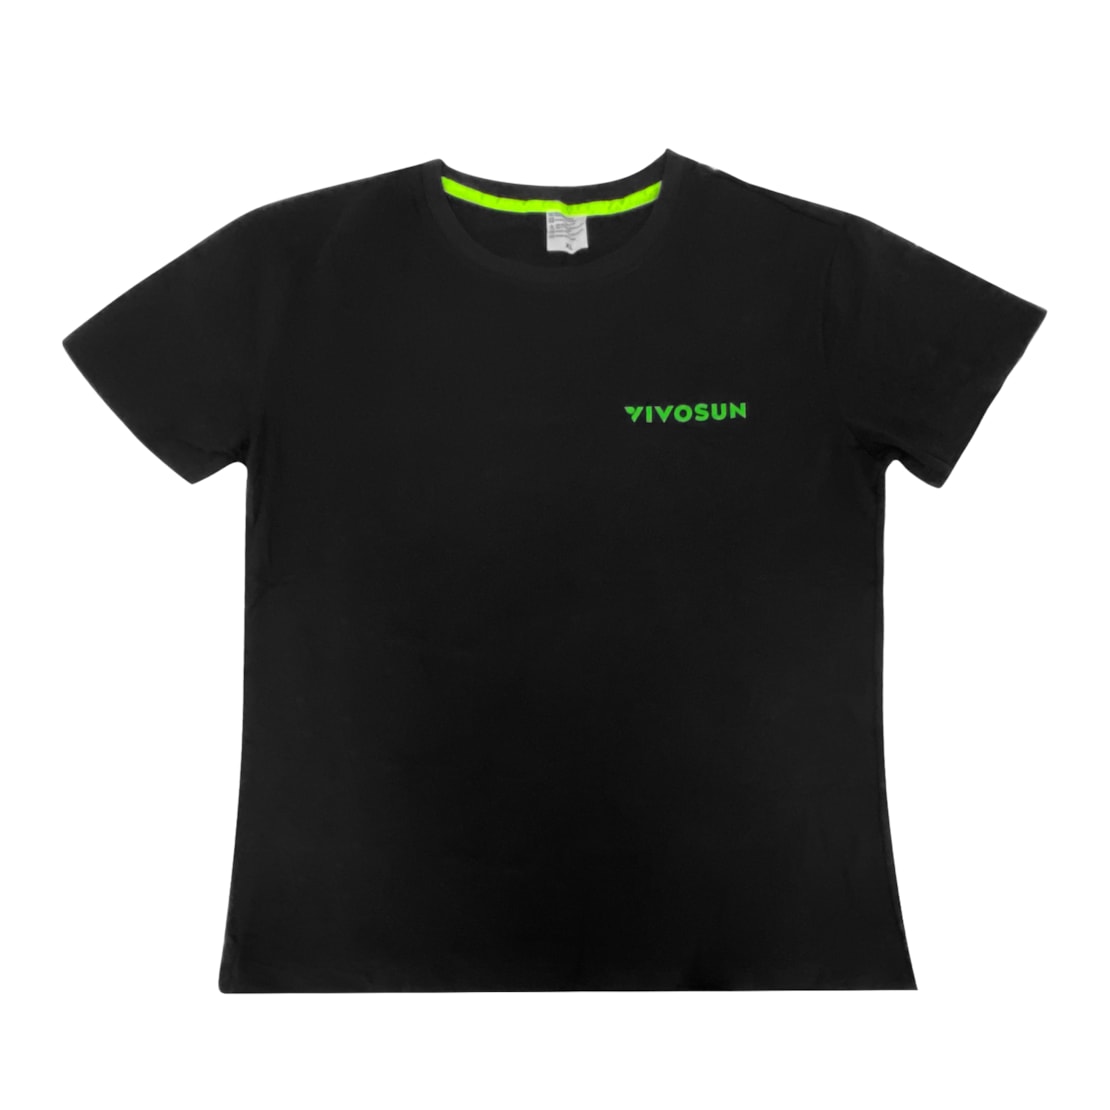 VIVOSUN T-shirt XXL Gift Box Included